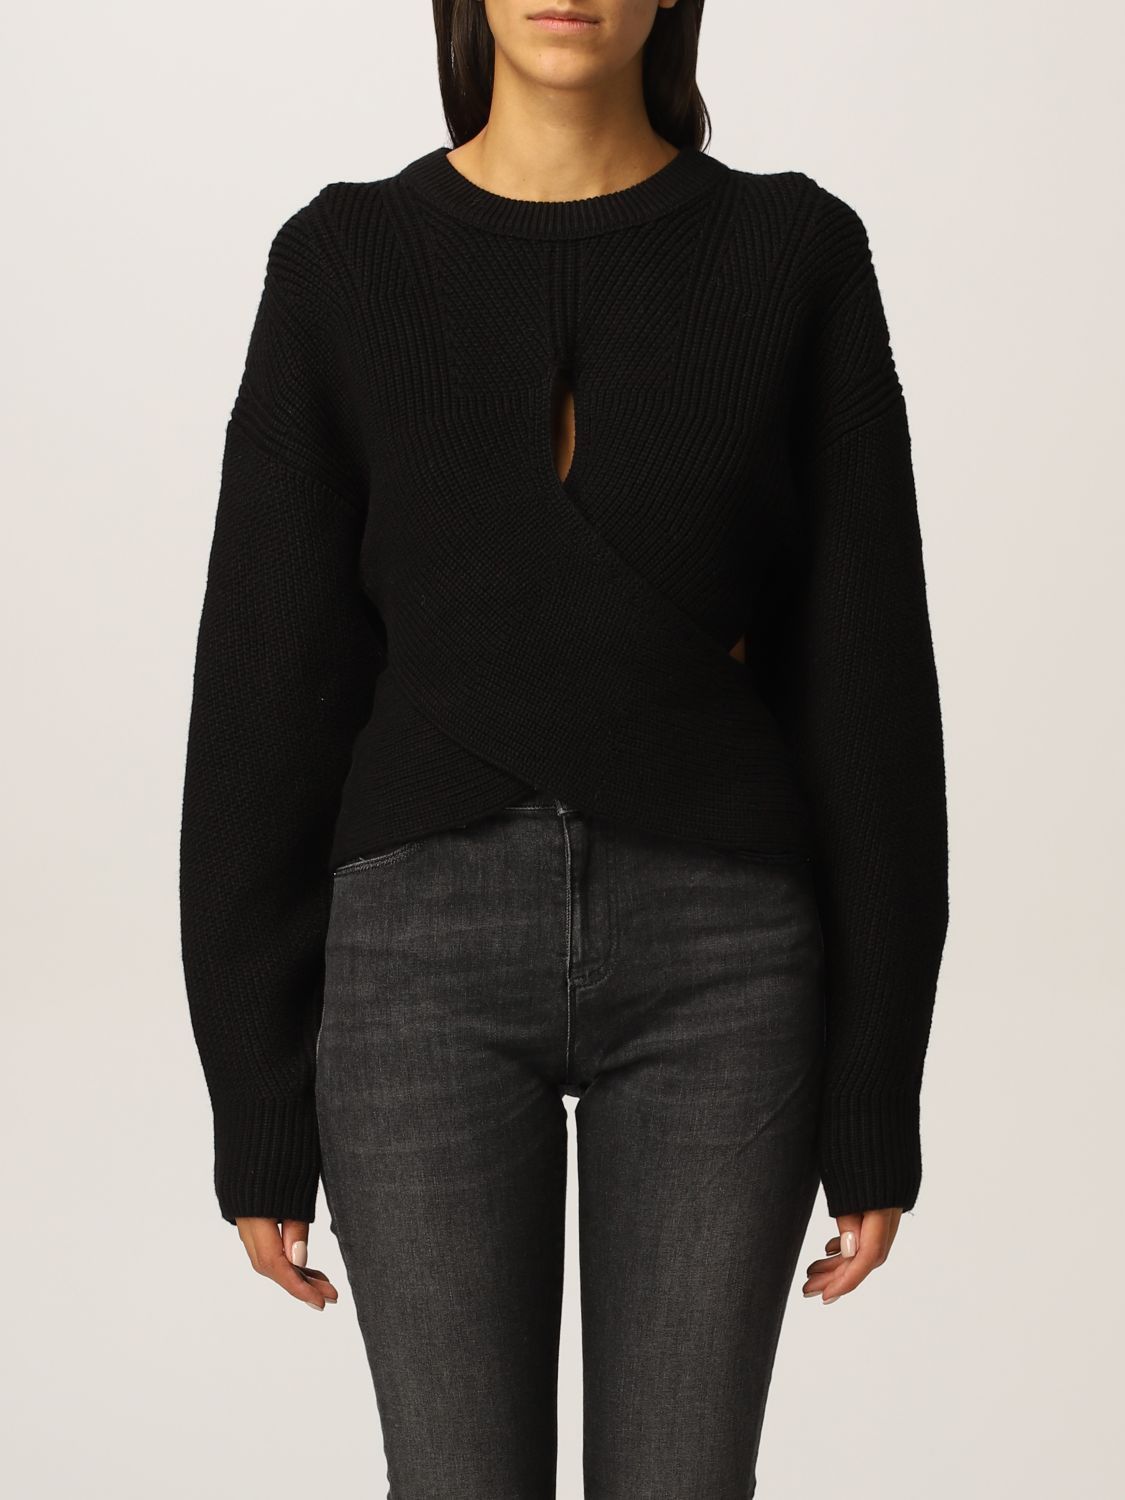 DIESEL: cut out pullover - Black | Diesel jumper A04878 0PBAC online on ...